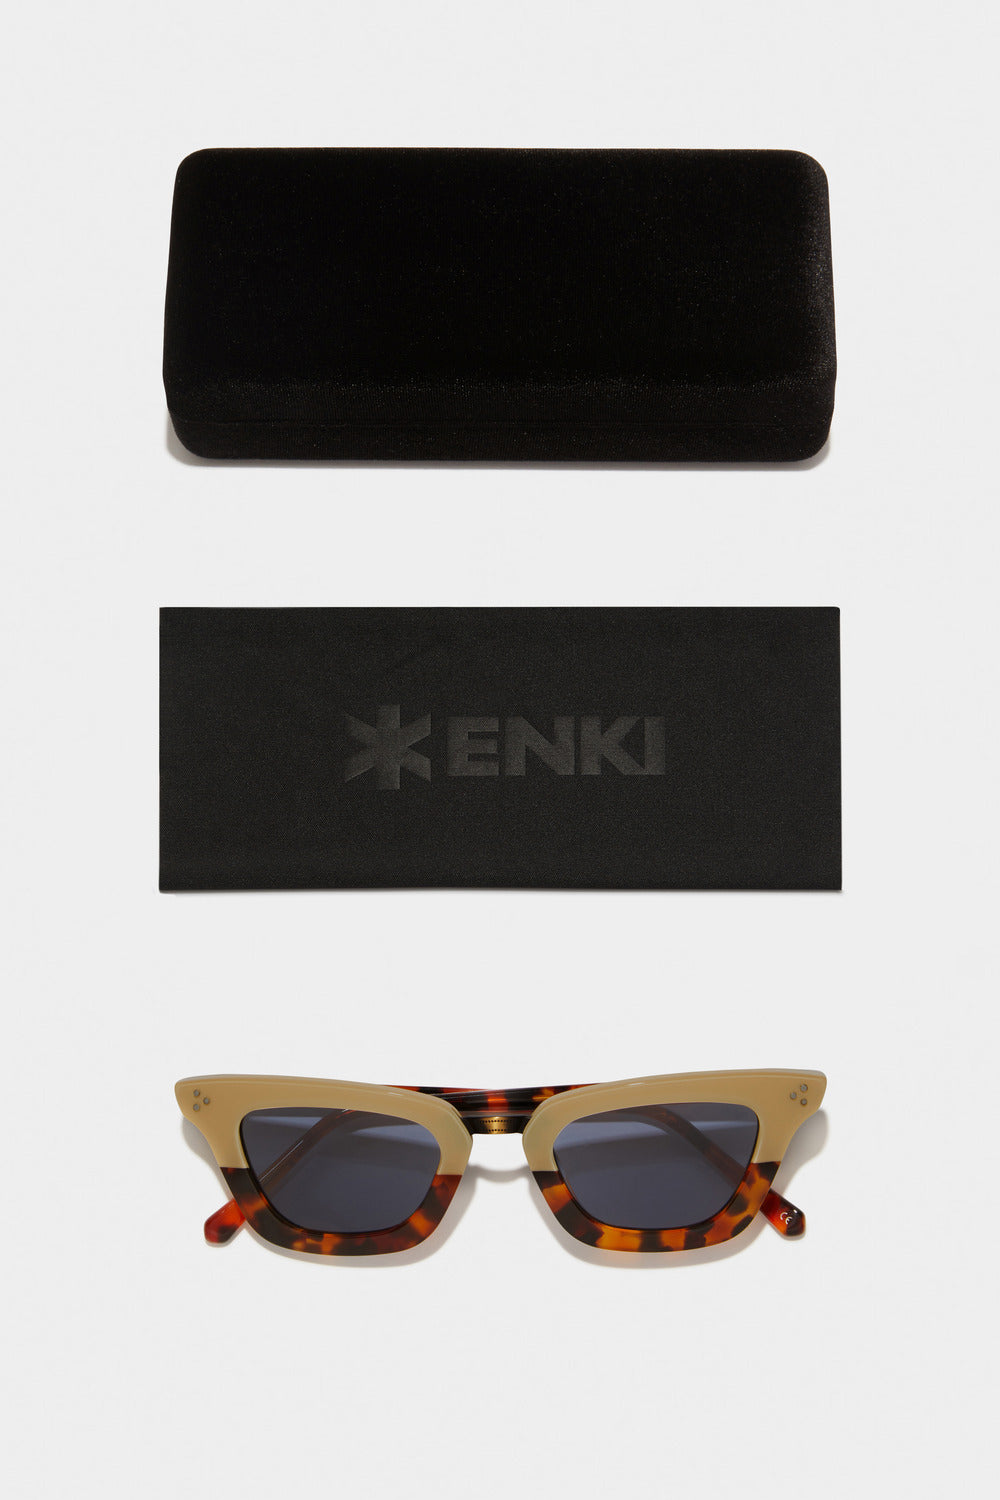 www.enkieyewear.com Calypso Men’s and Women’s Sunglasses